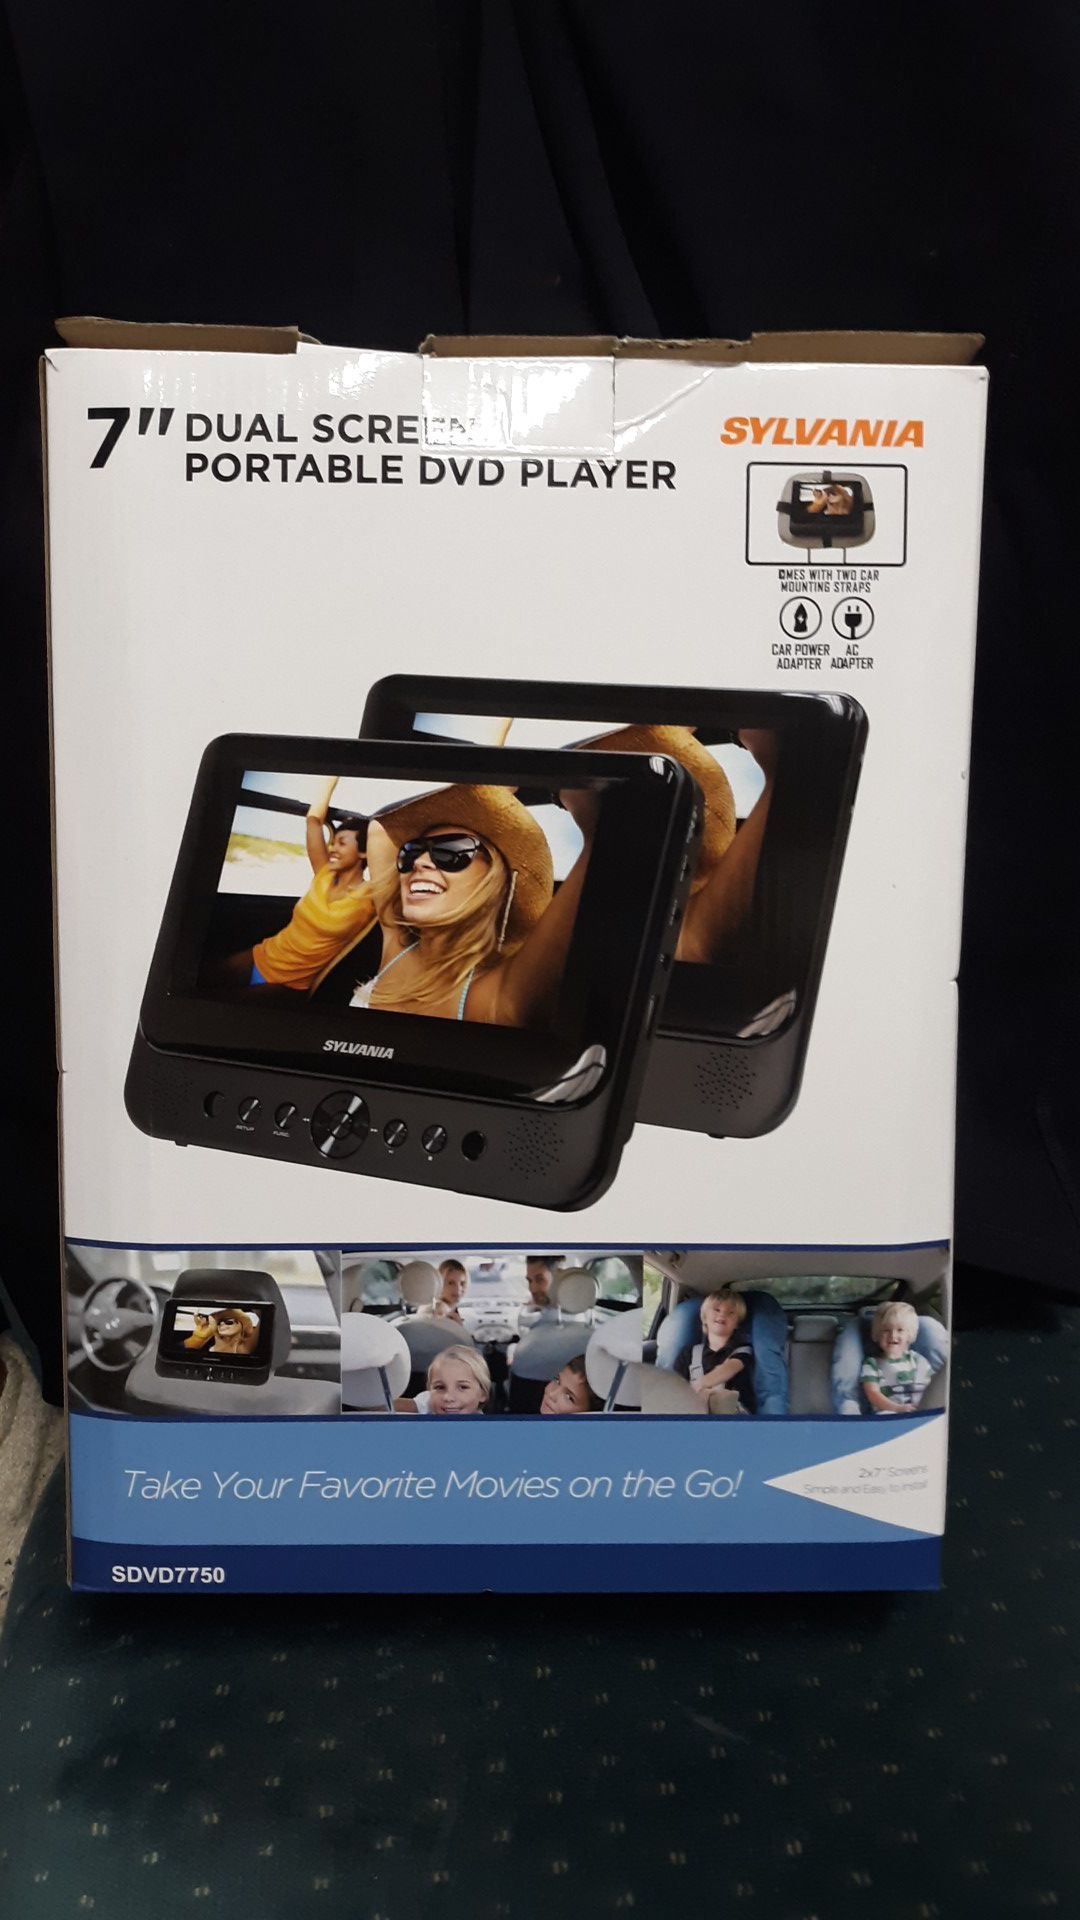 7" Dual Screen Portable DVD Player